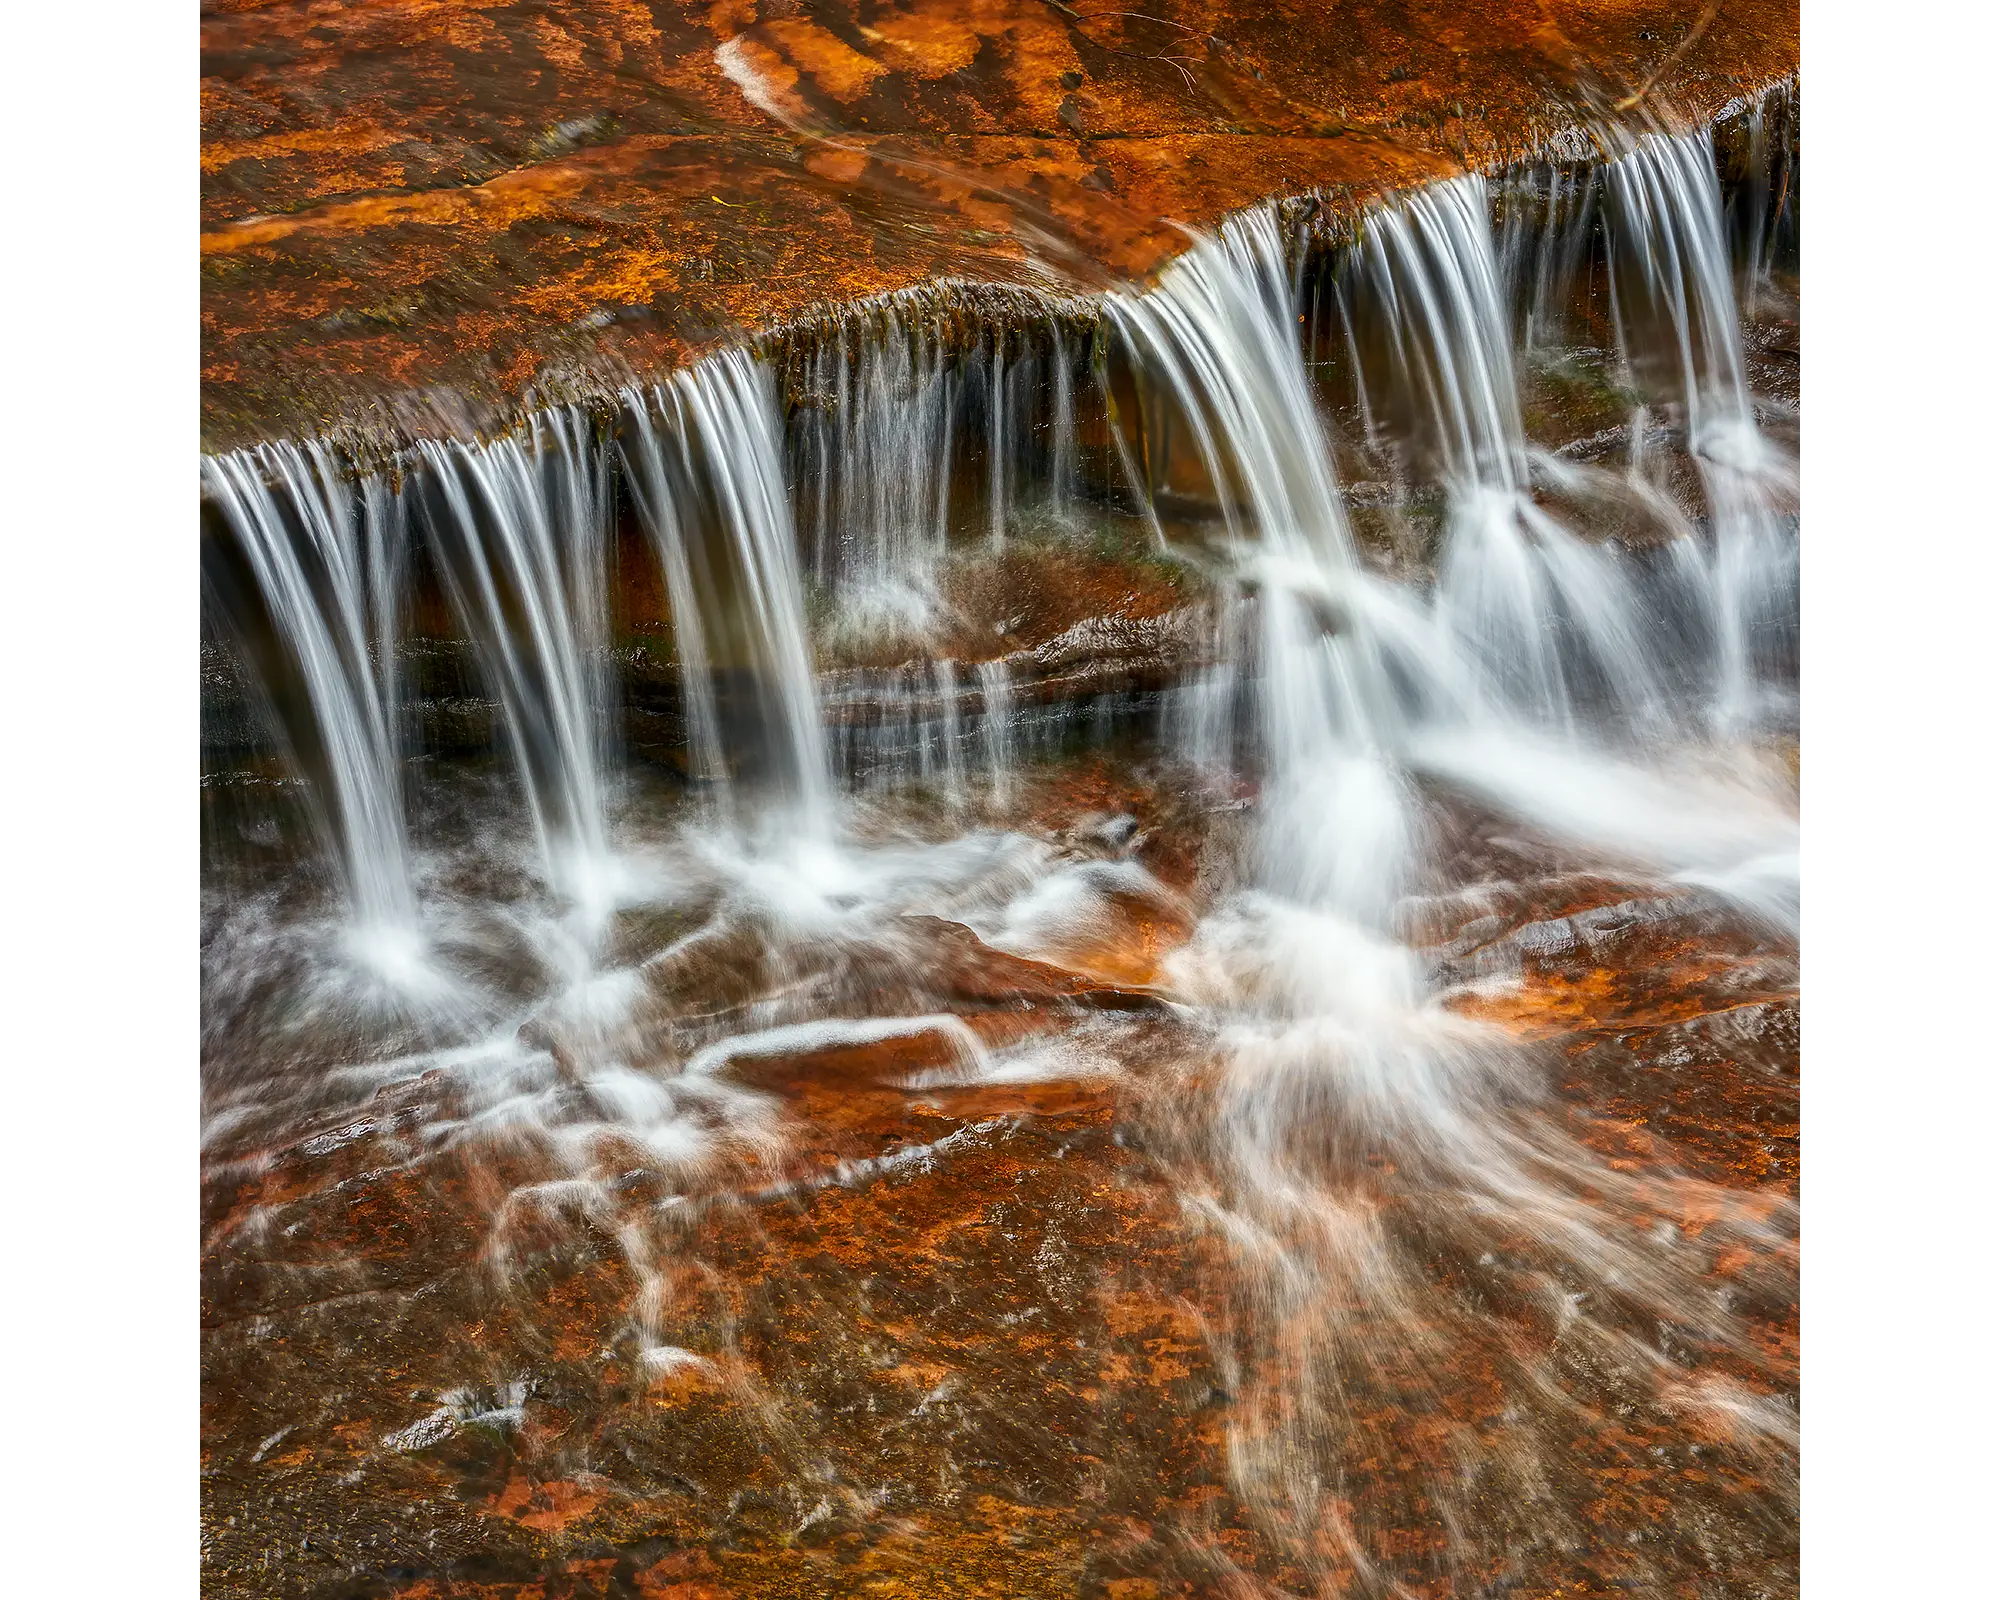 Motion - Jamison Creek, Blue Mountains National Park, New South Wales, Australia.